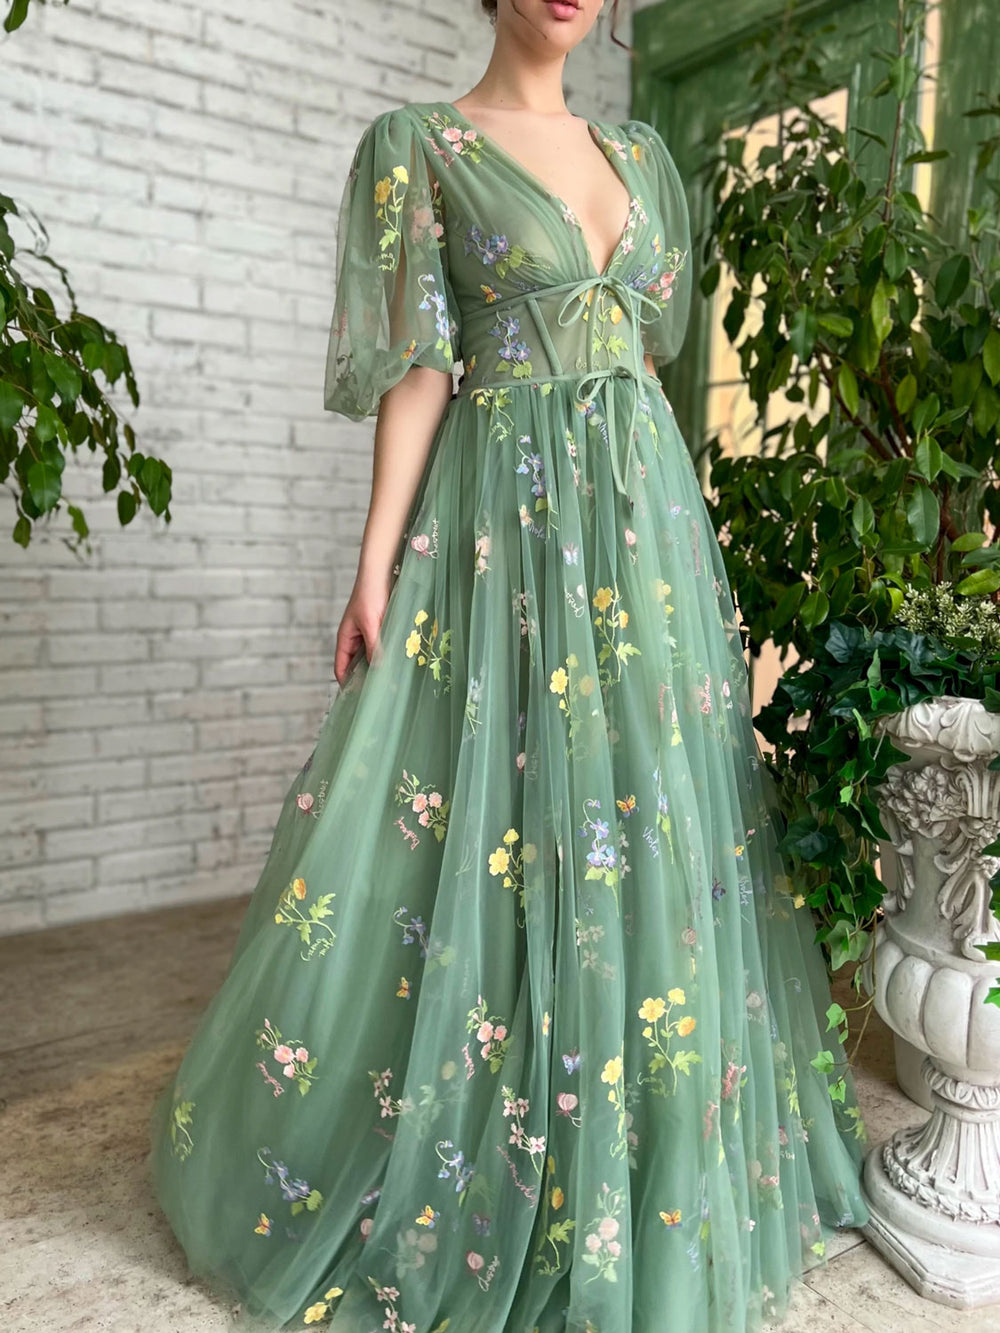 Green v neck tulle lace long prom dress, green tulle formal dress